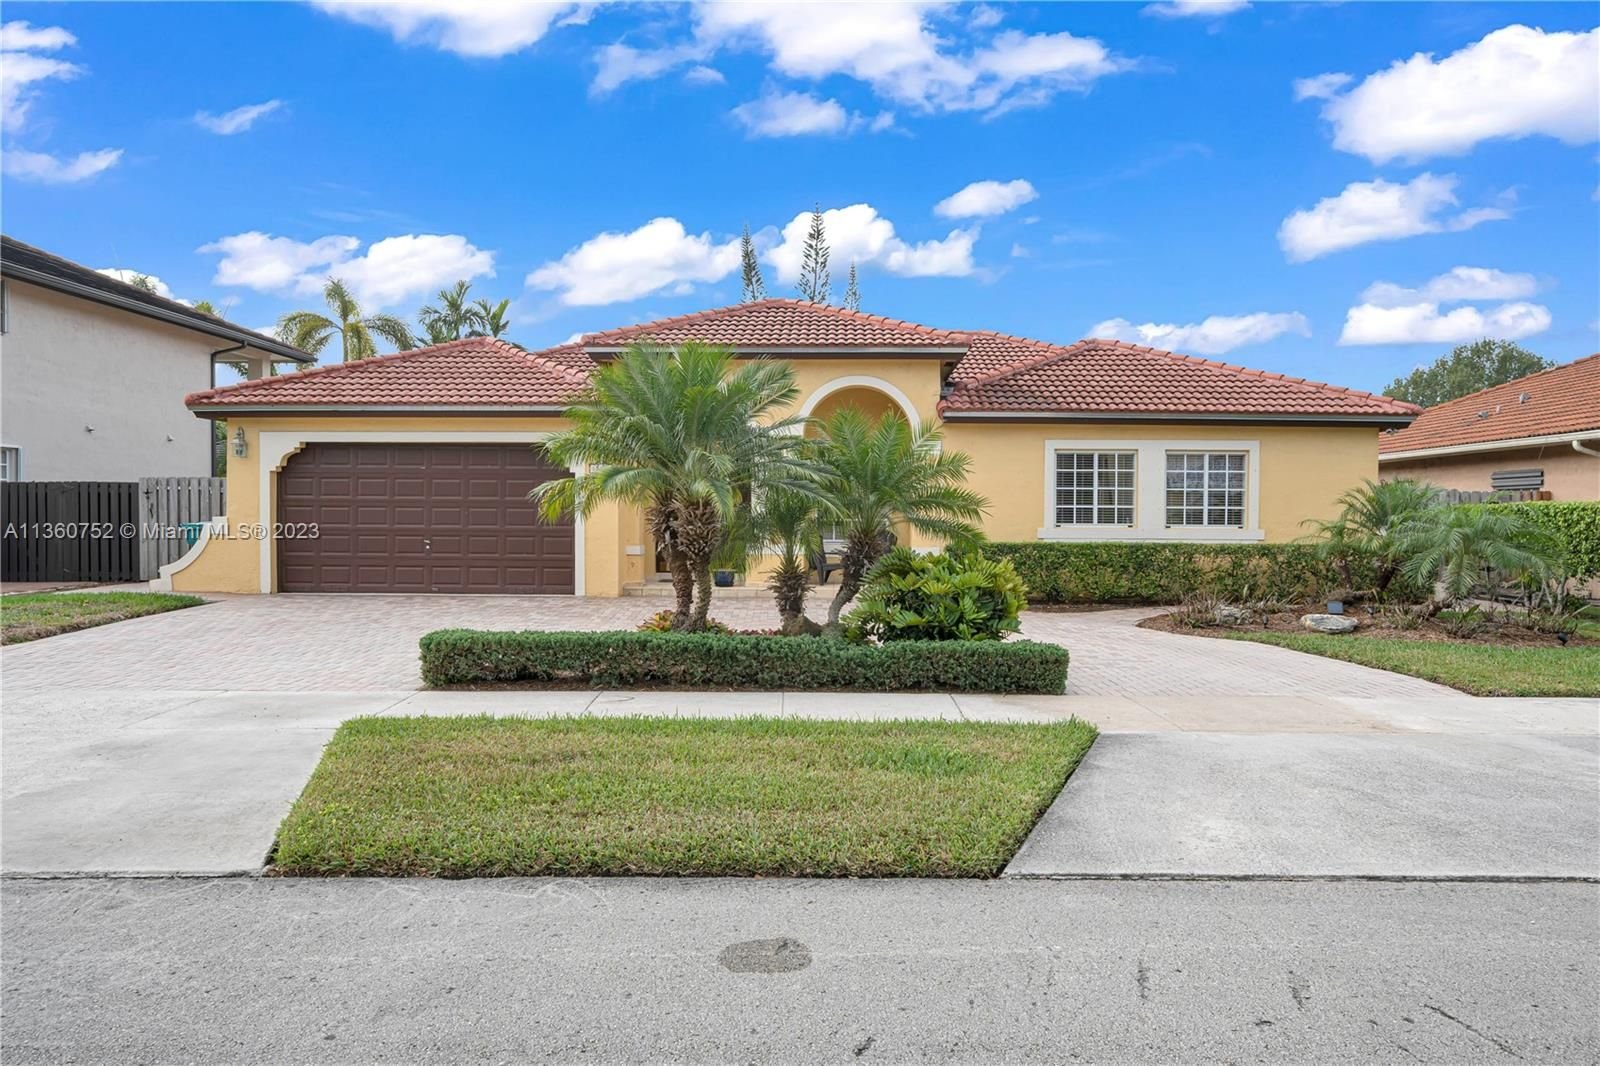 Real estate property located at 15806 100th Ter, Miami-Dade County, Miami, FL